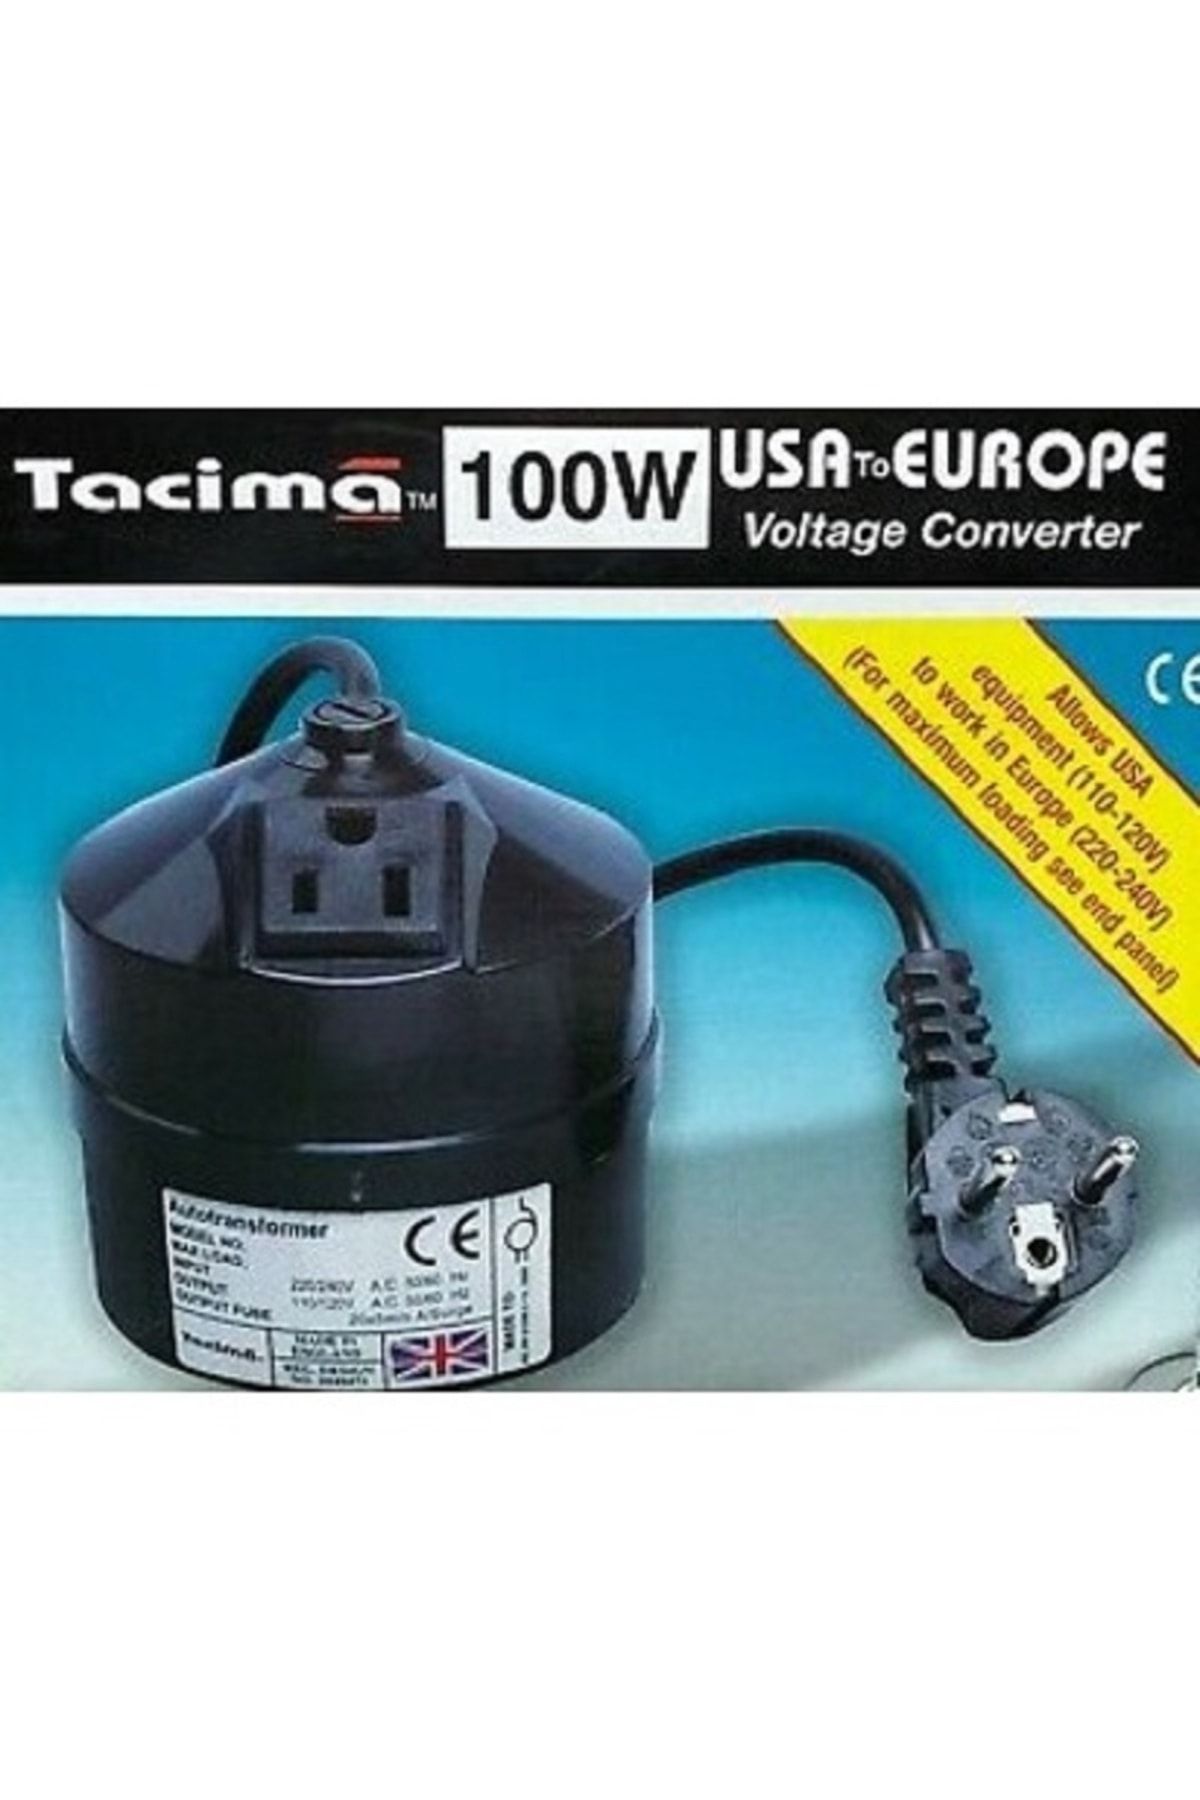 3M Tacima 100w Voltage Converter 110-120v Voltaj Çevirici Dönüştürücü